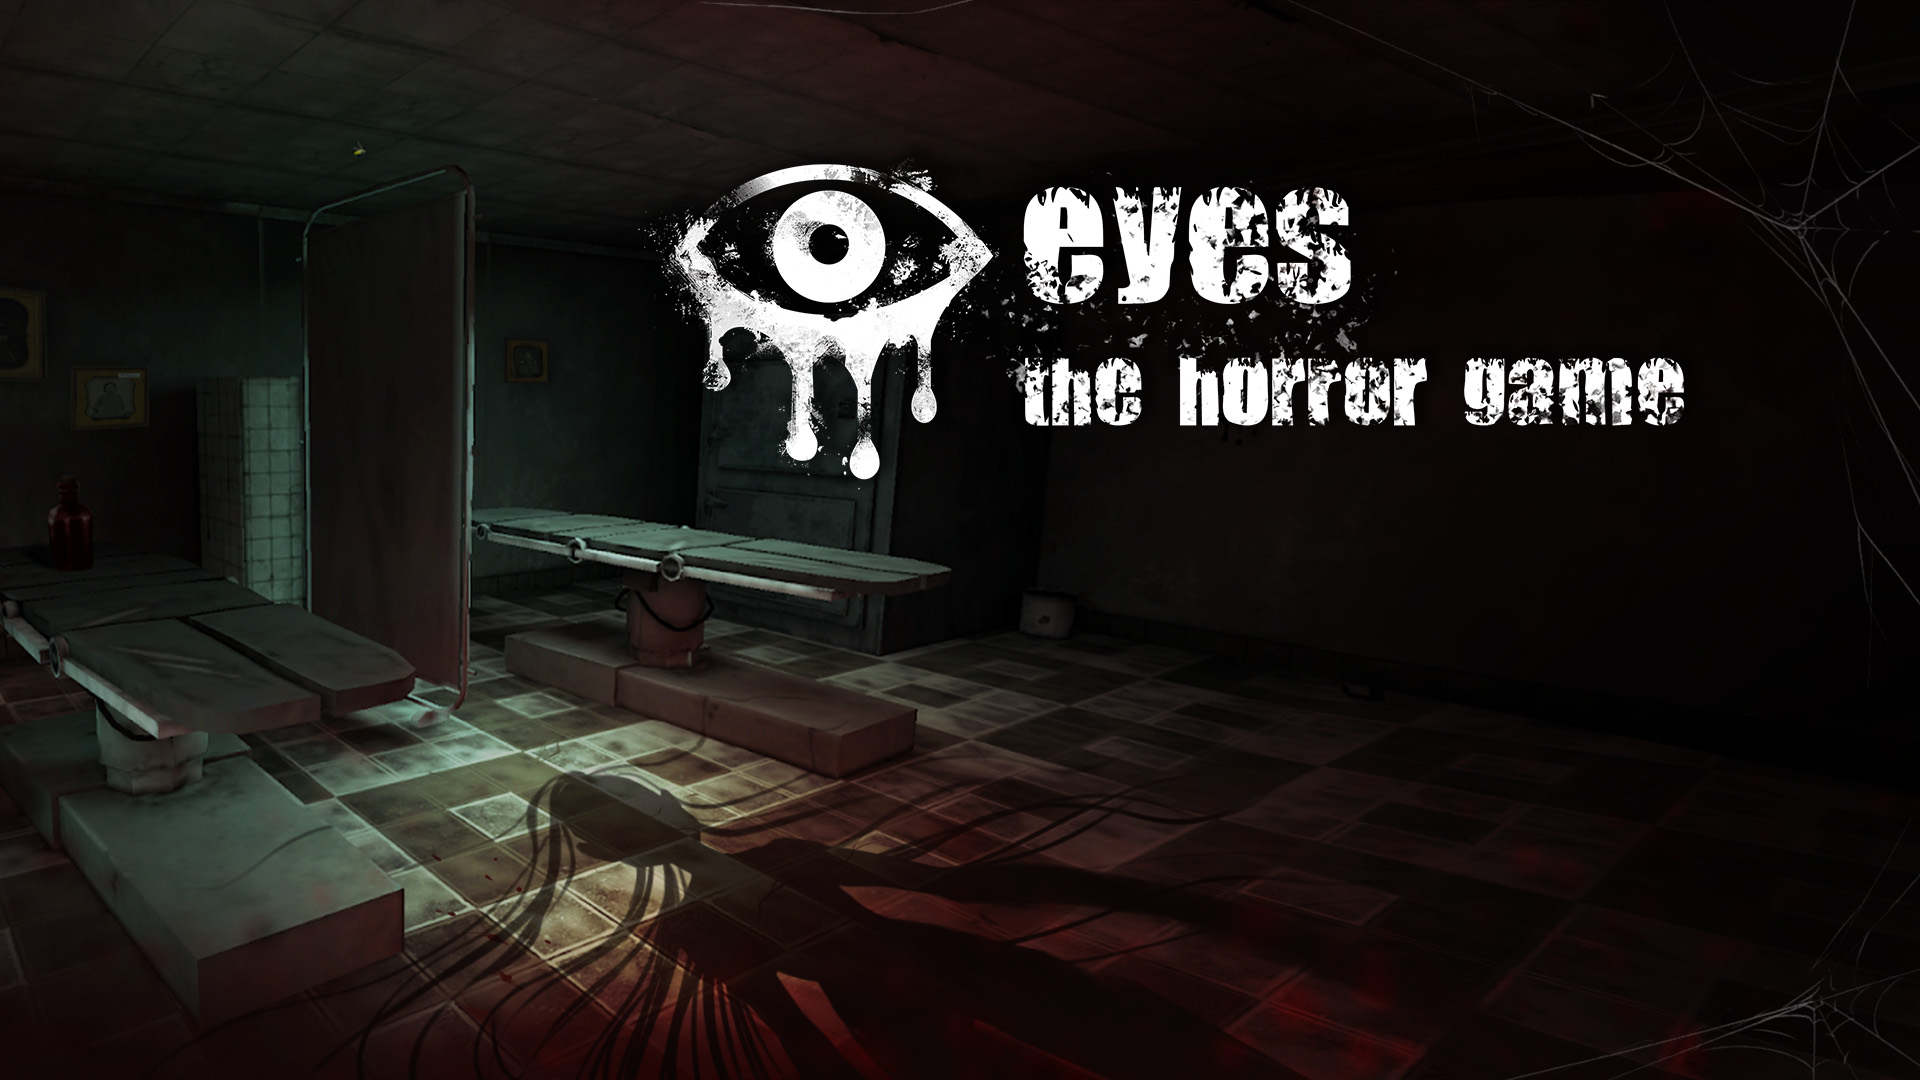 Eyes - The Horror Game (2013)